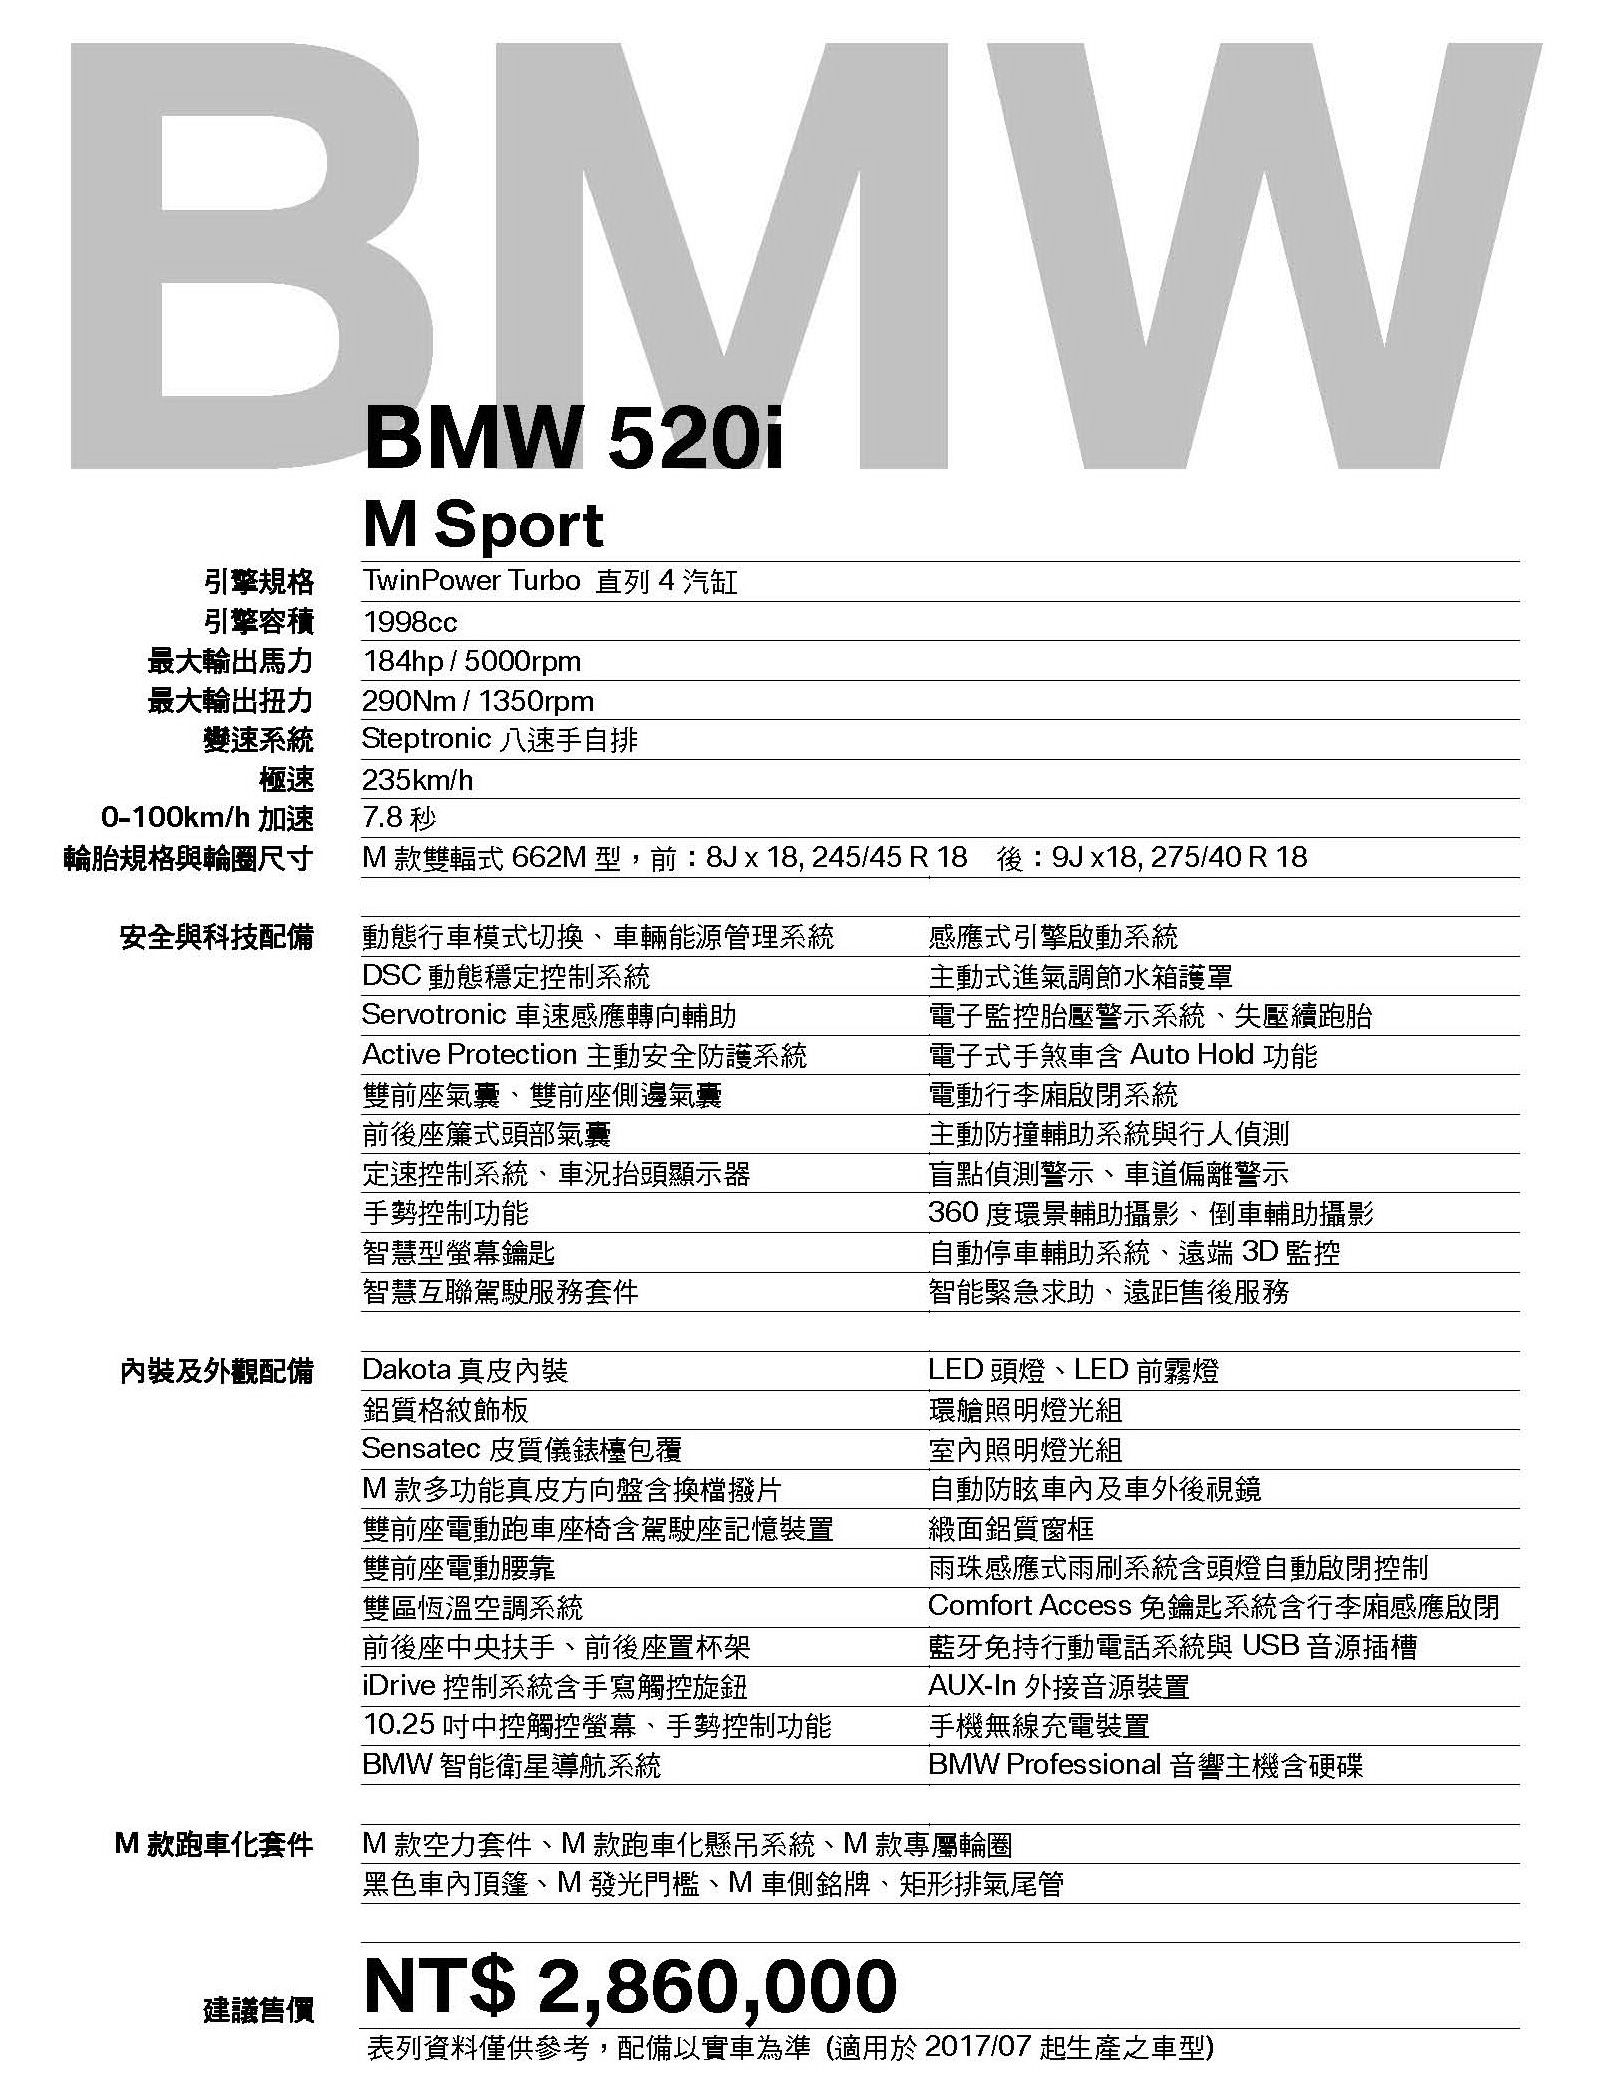 車展表520i M Sport(2017-07)_286